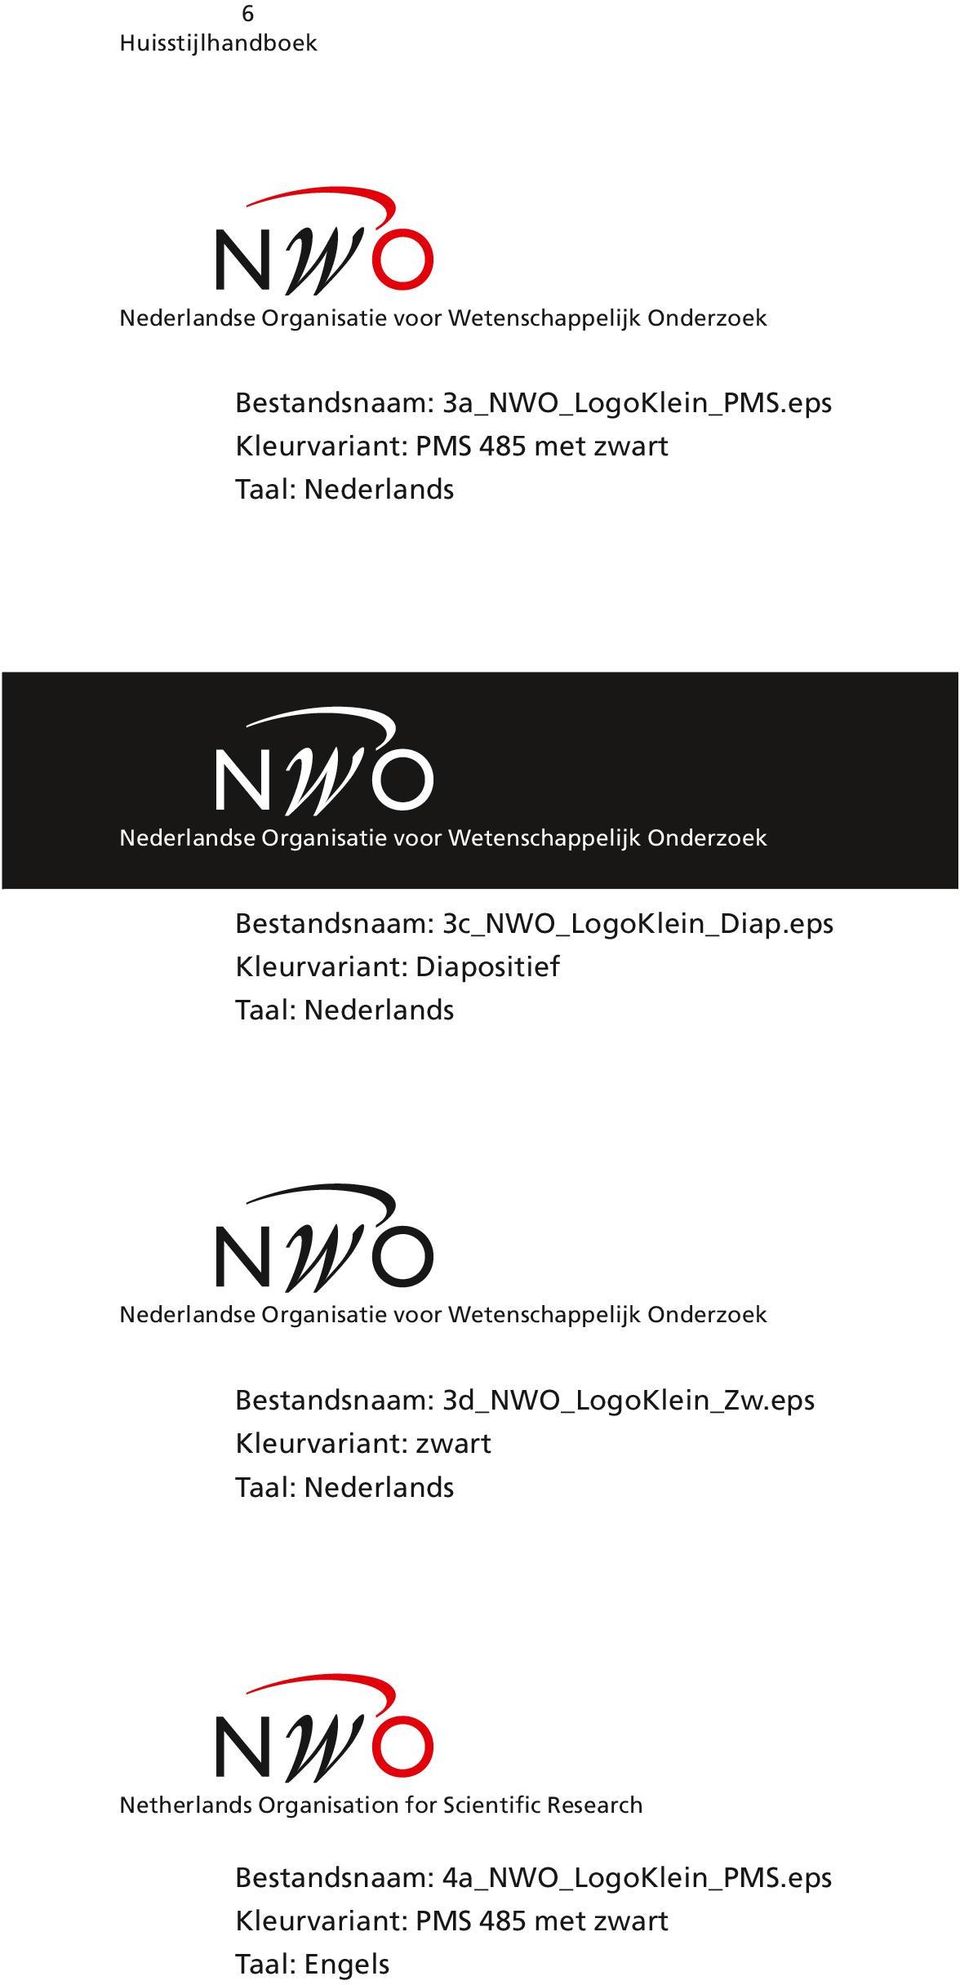 3c_NWO_LogoKlein_Diap.